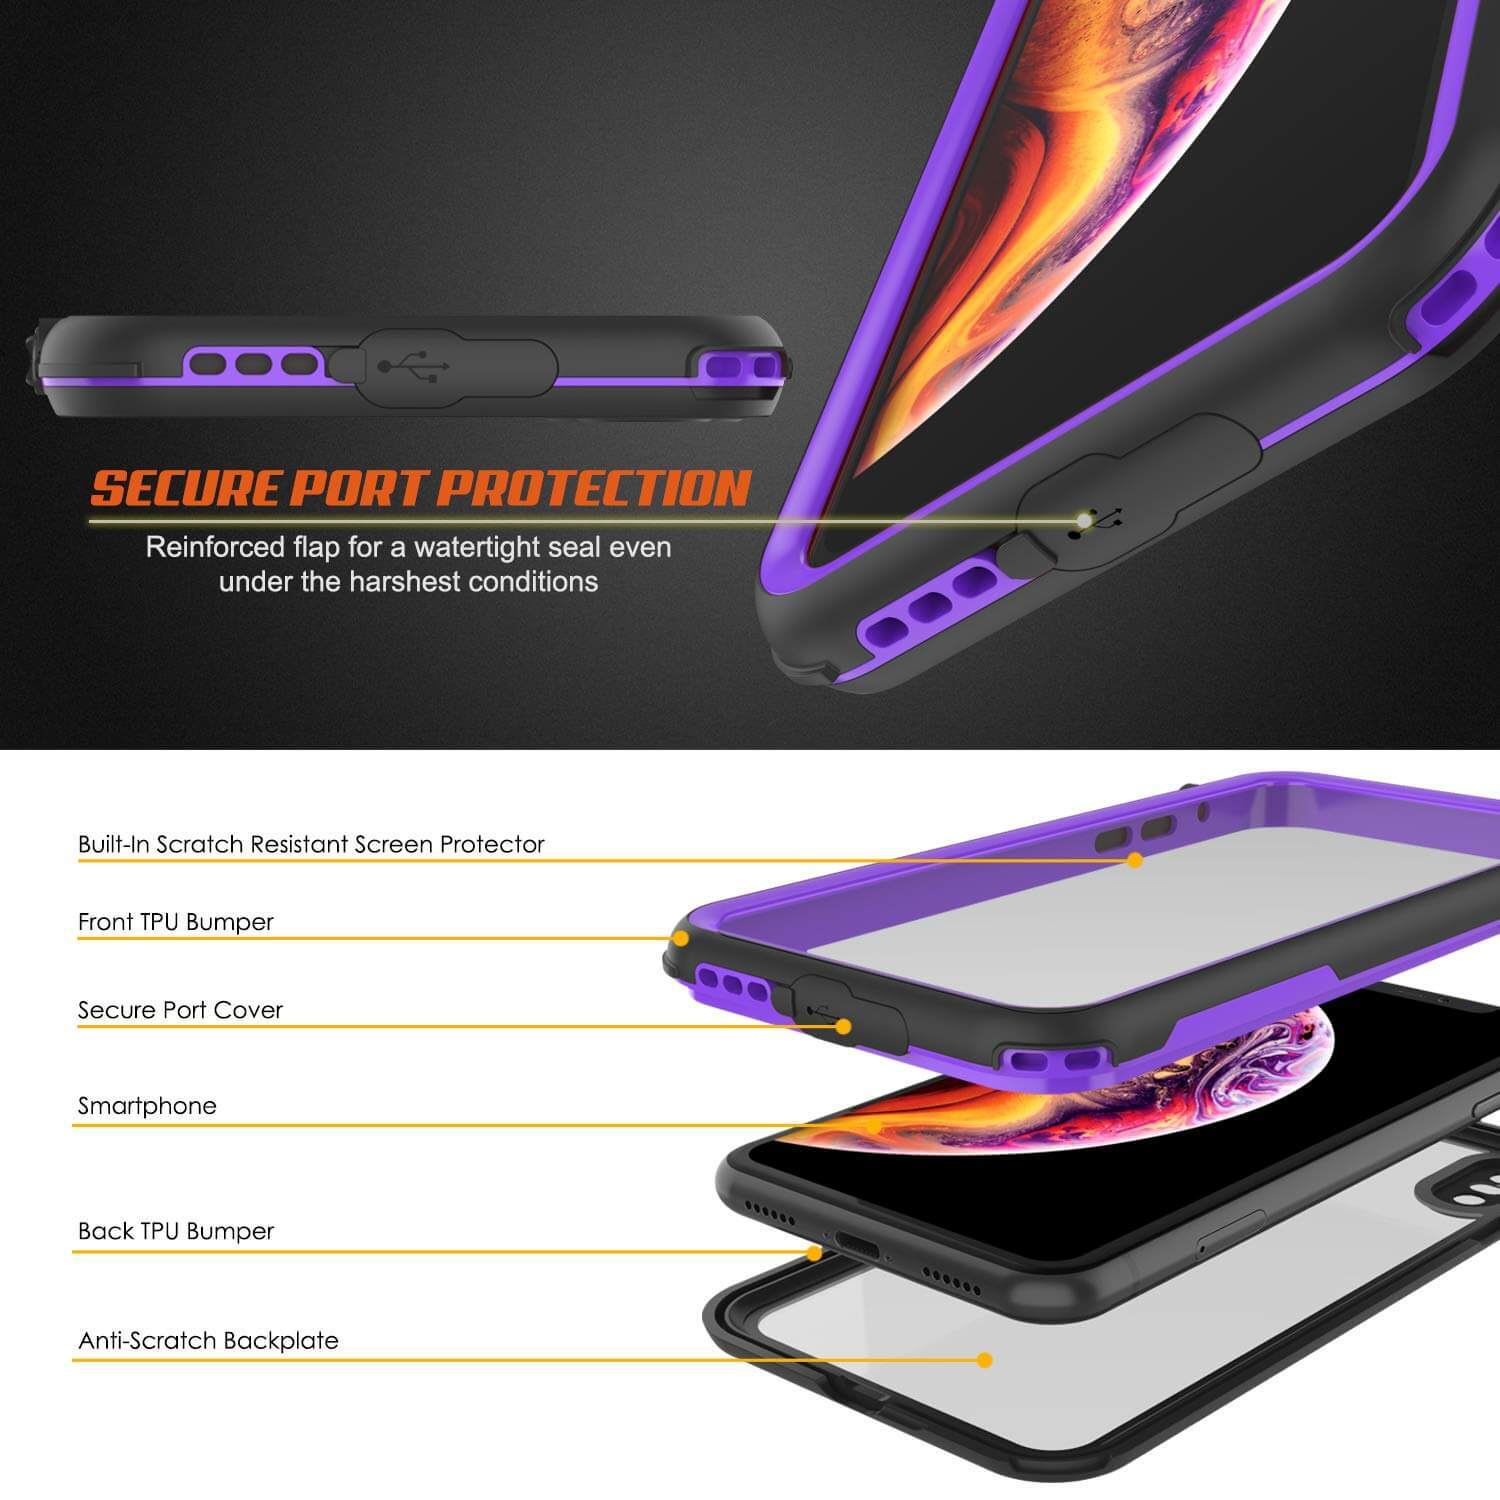 iPhone XS Waterproof IP68 Case, Punkcase [Purple] [Rapture Series]  W/Built in Screen Protector